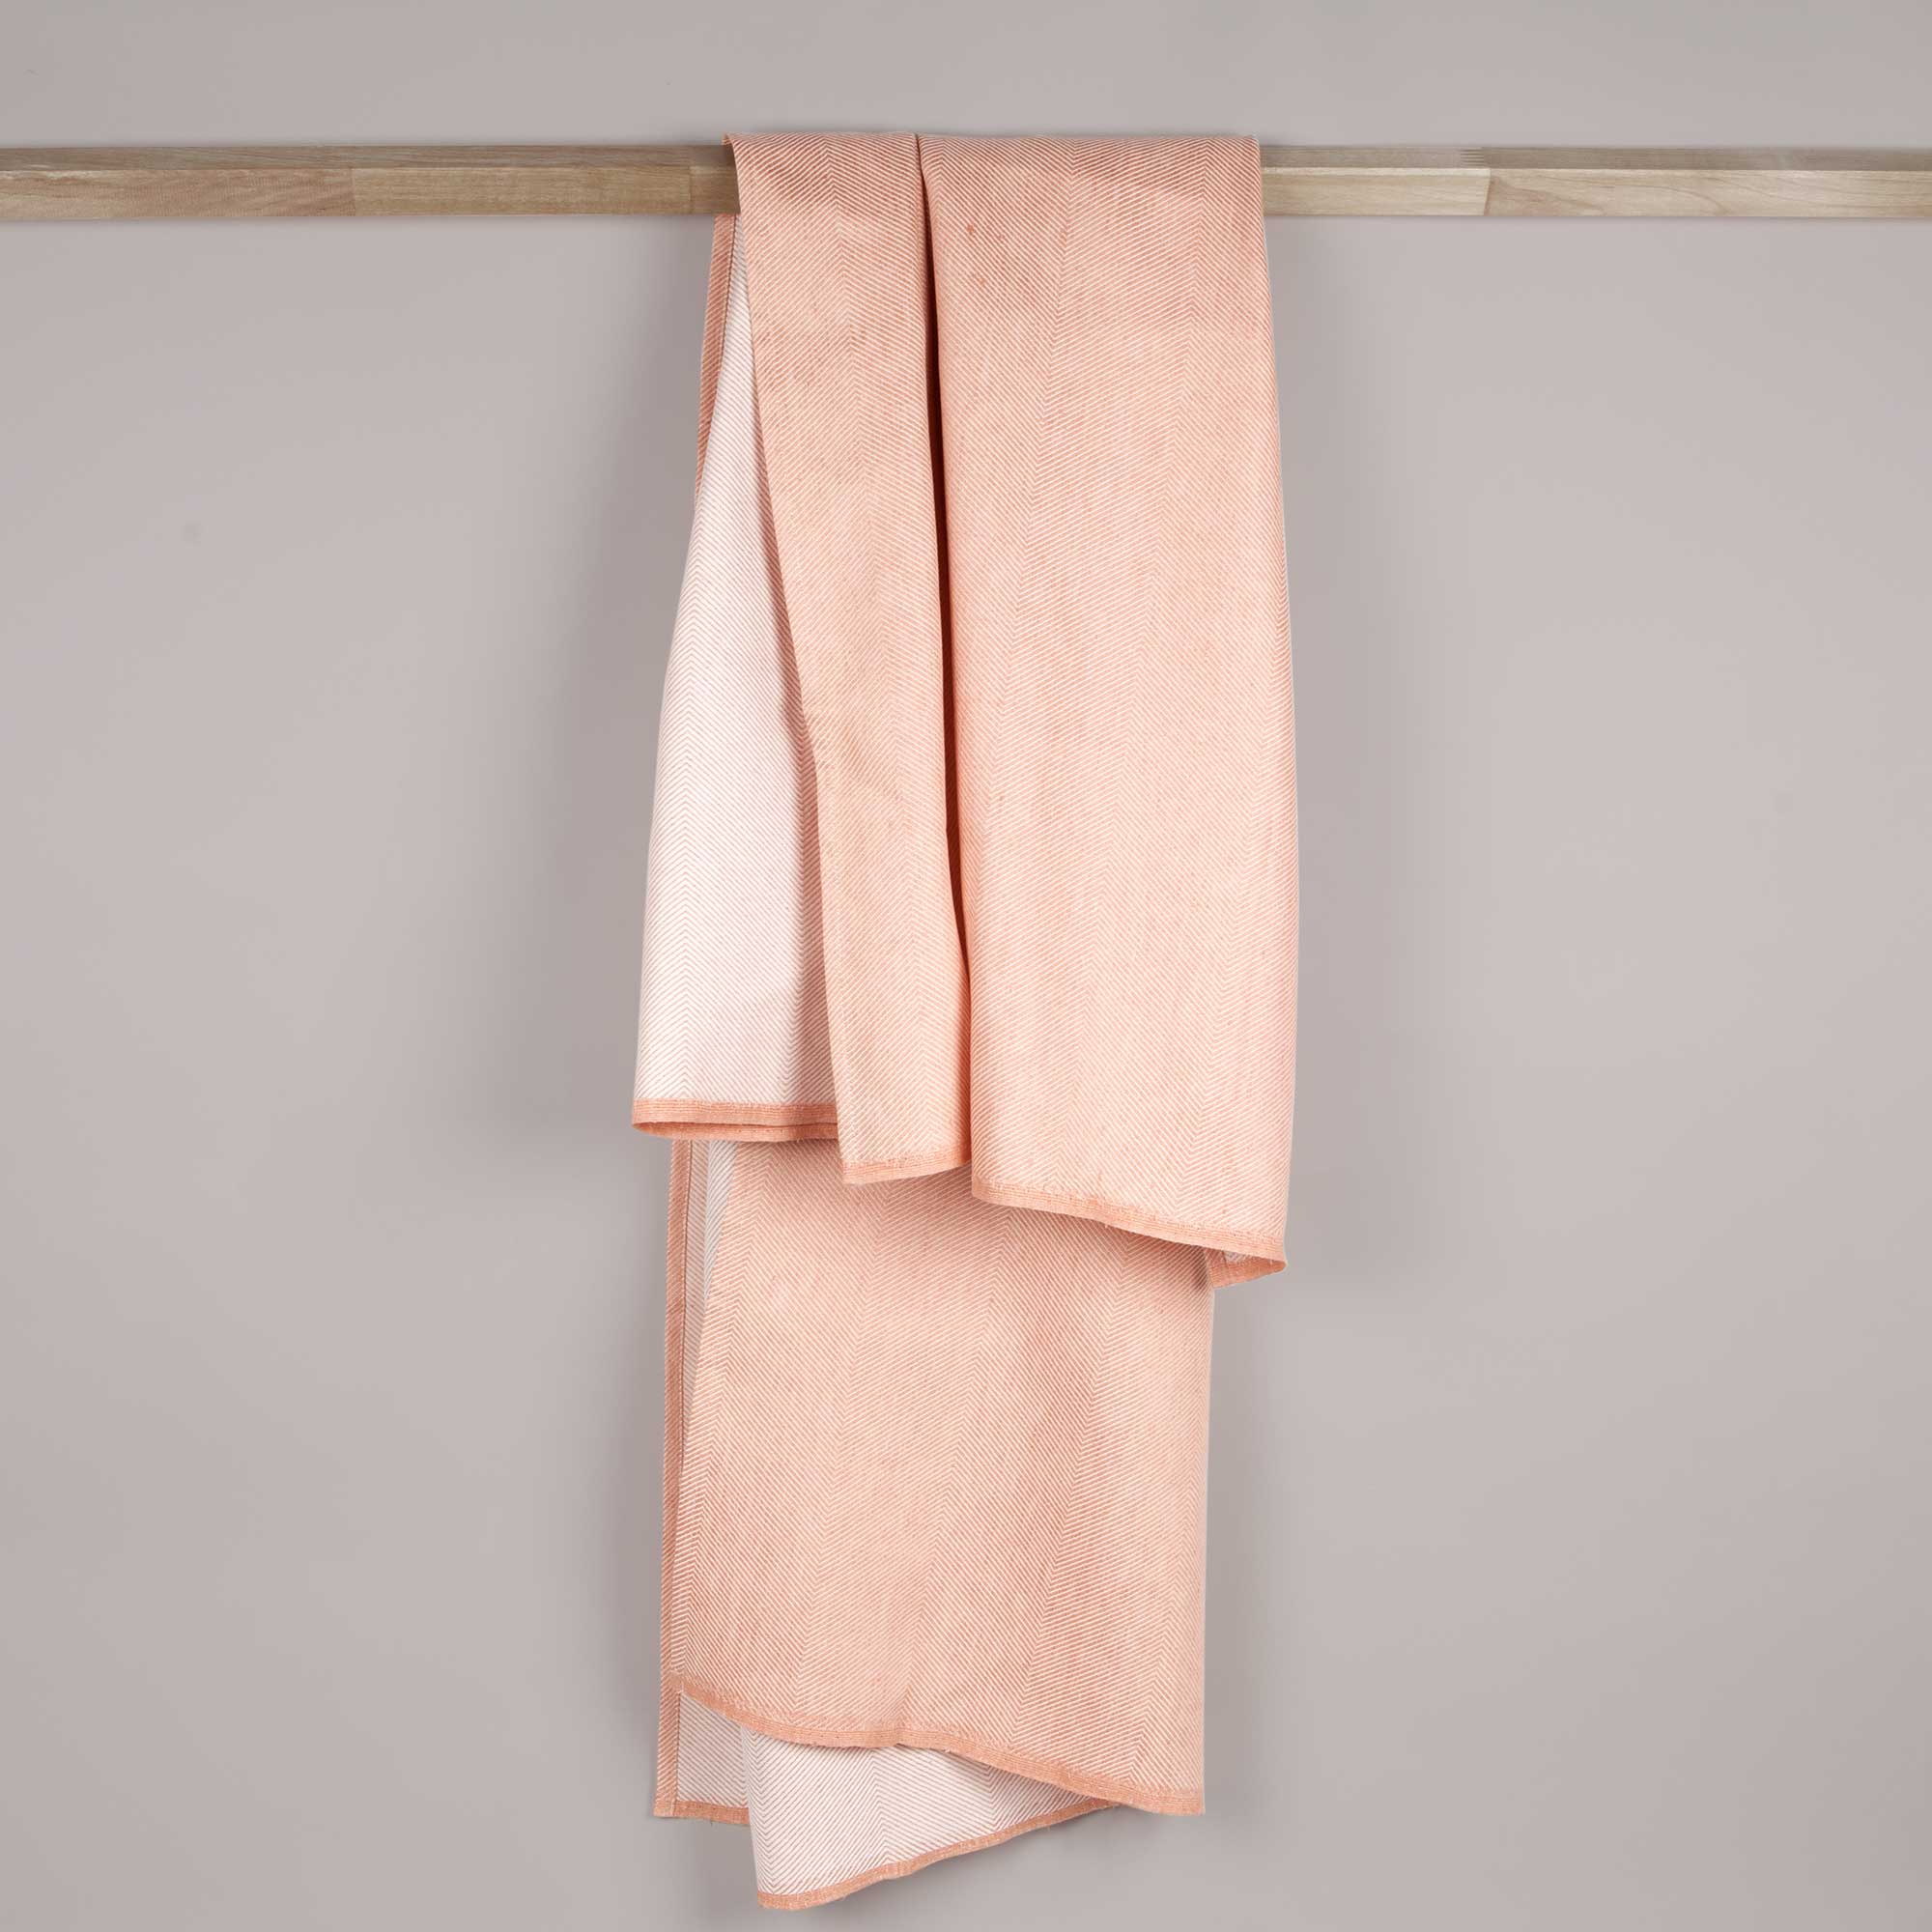 Badehåndklæde, linned/bomuld, Støvet koral. Design af Anne Rosenberg, RosenbergCph